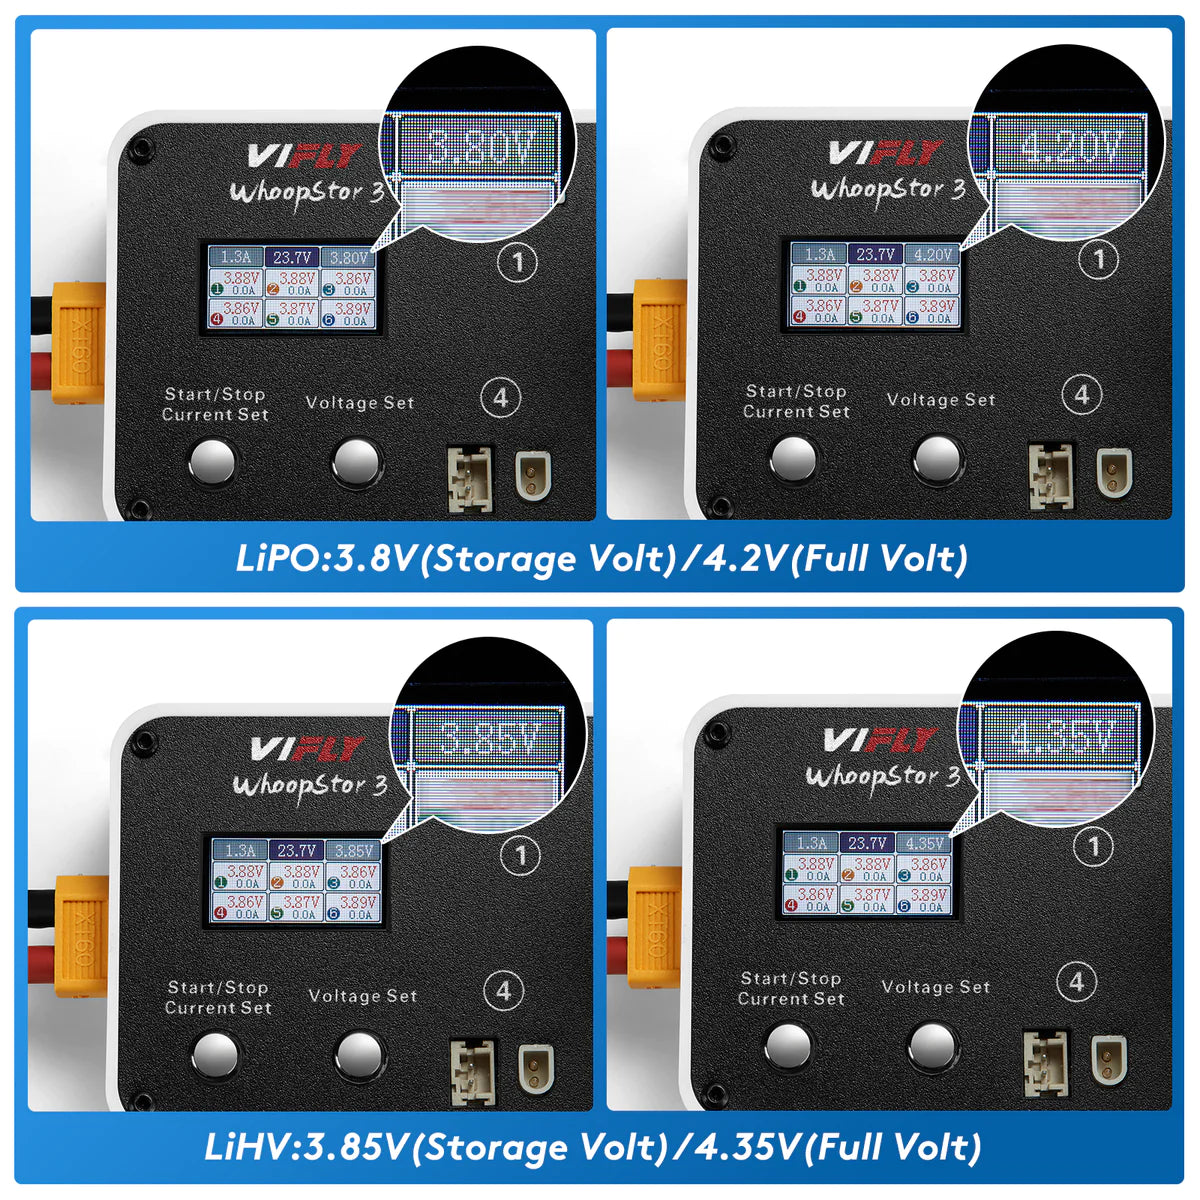 VIFLY WhoopStor V3 - 1S Batteriespeicherladegerät und -entladegerät